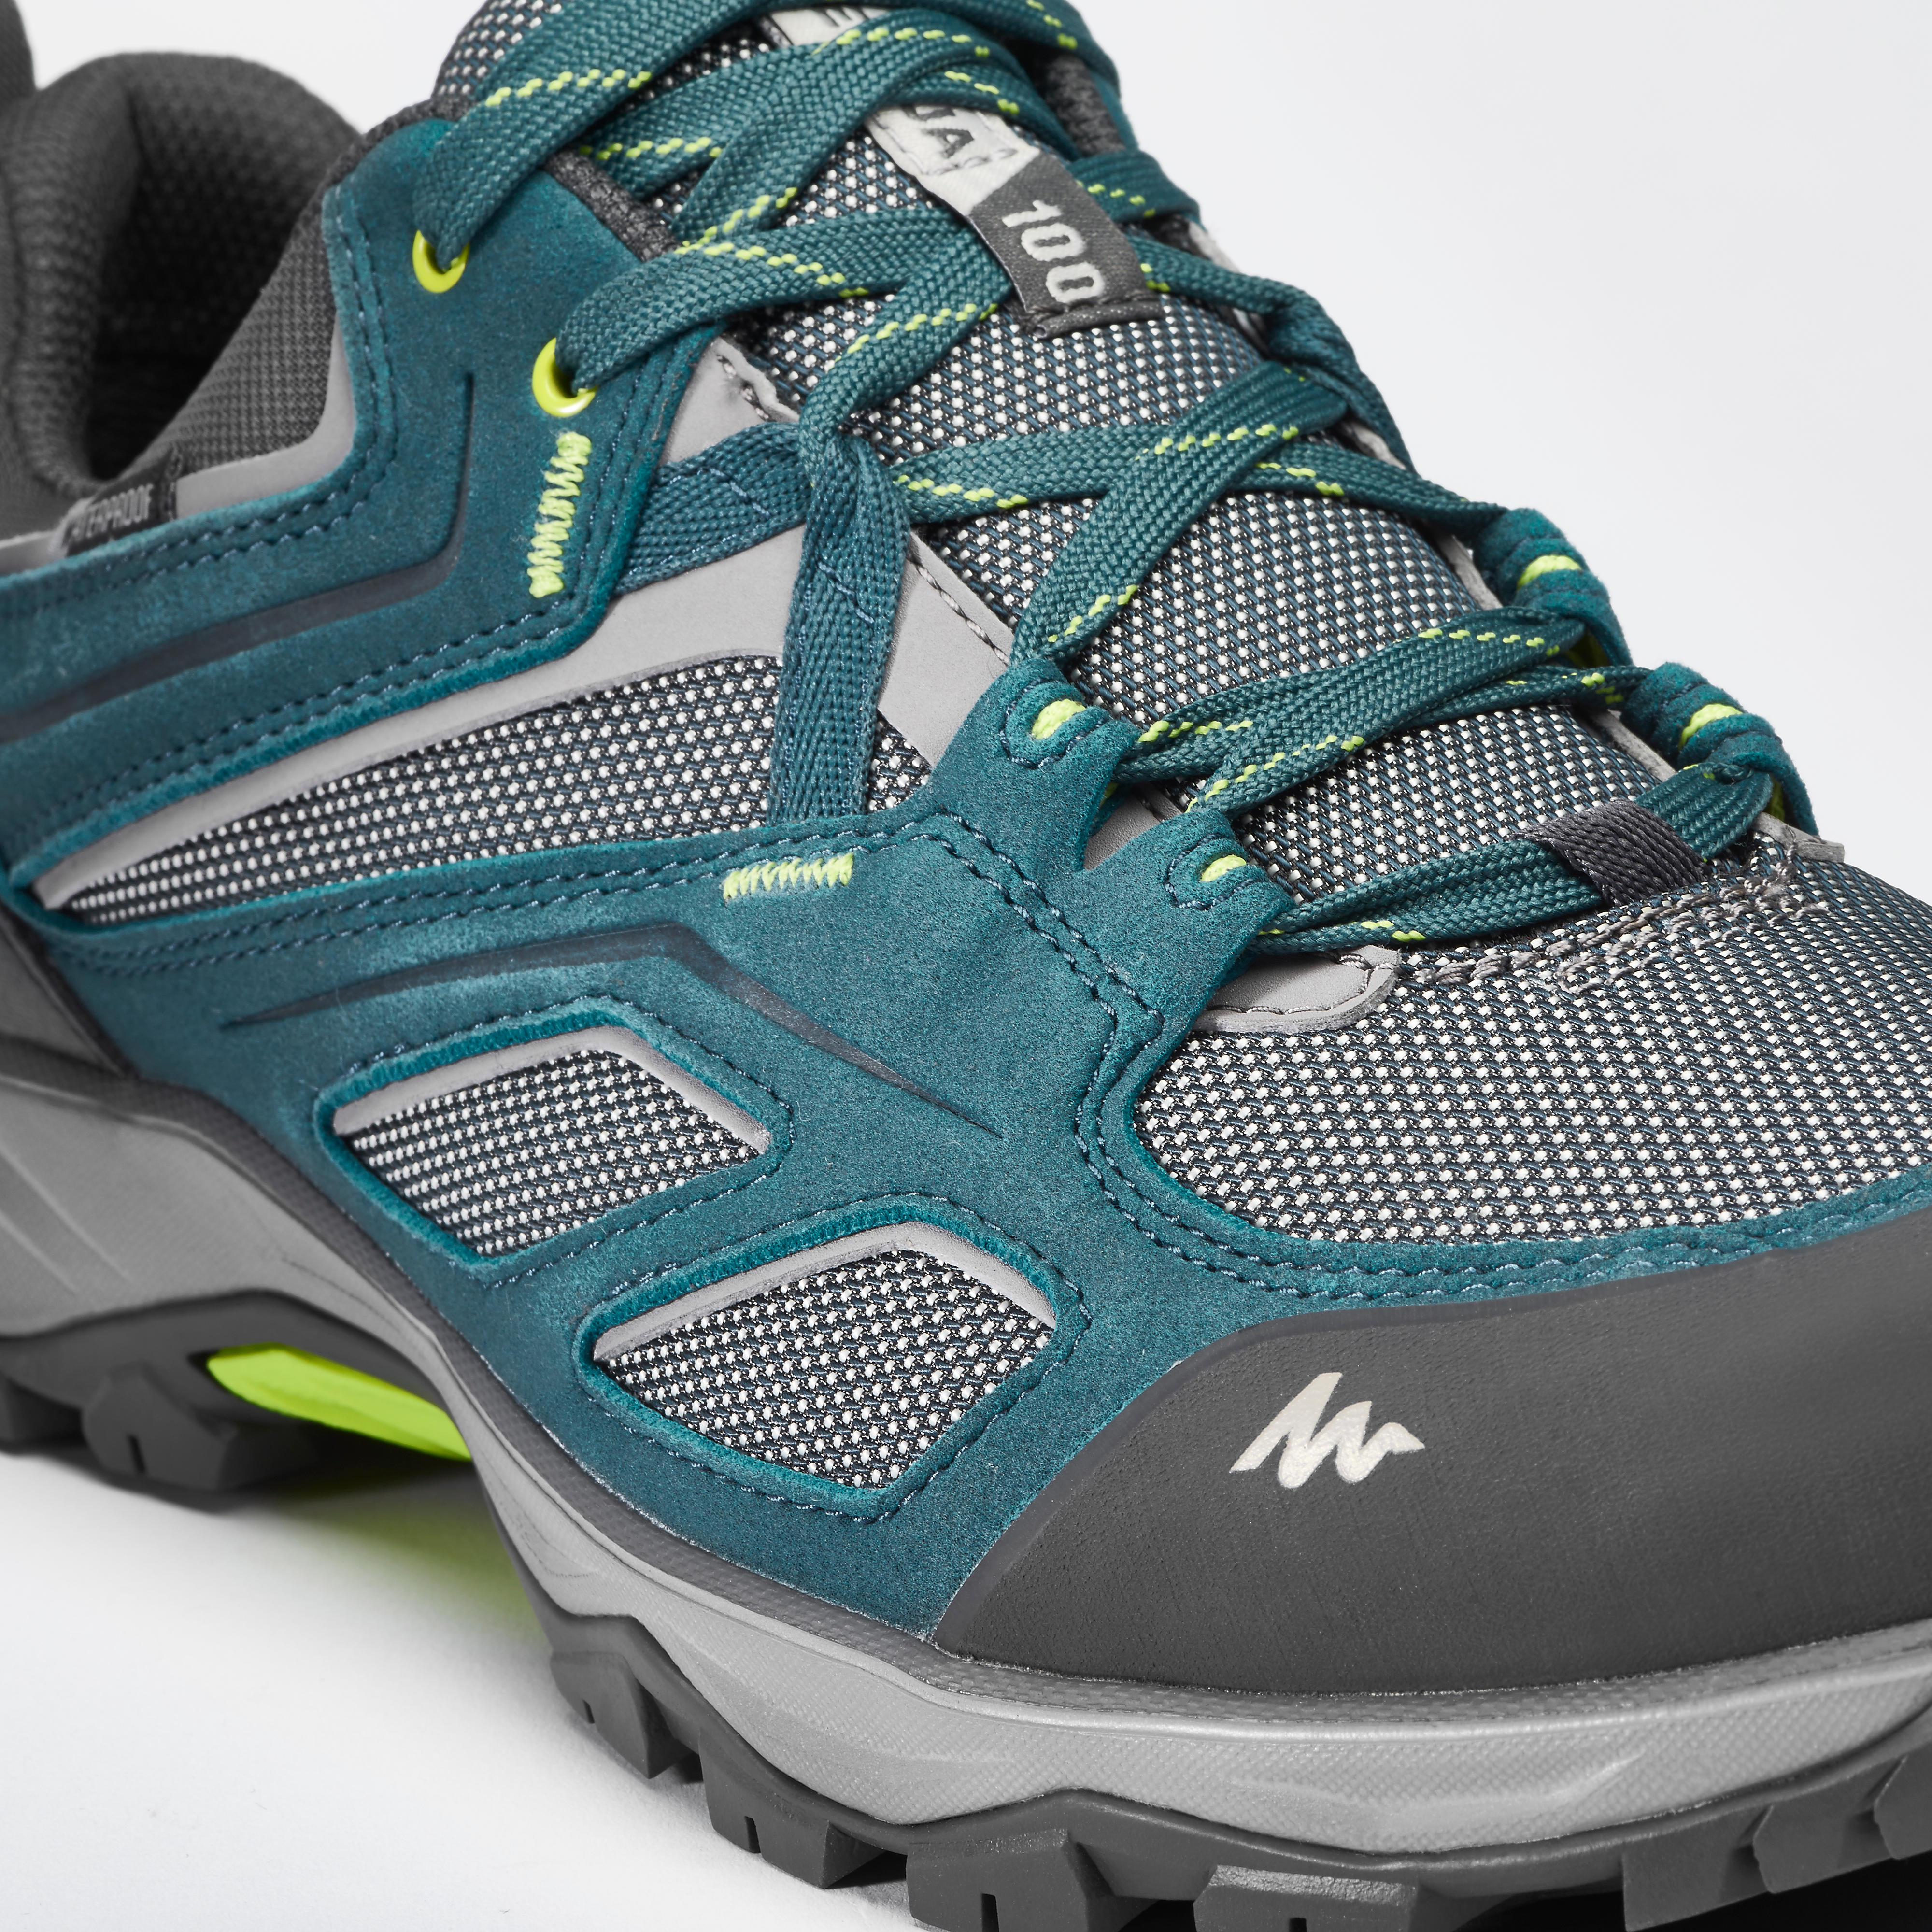 Men's Waterproof Mountain Walking Shoes 